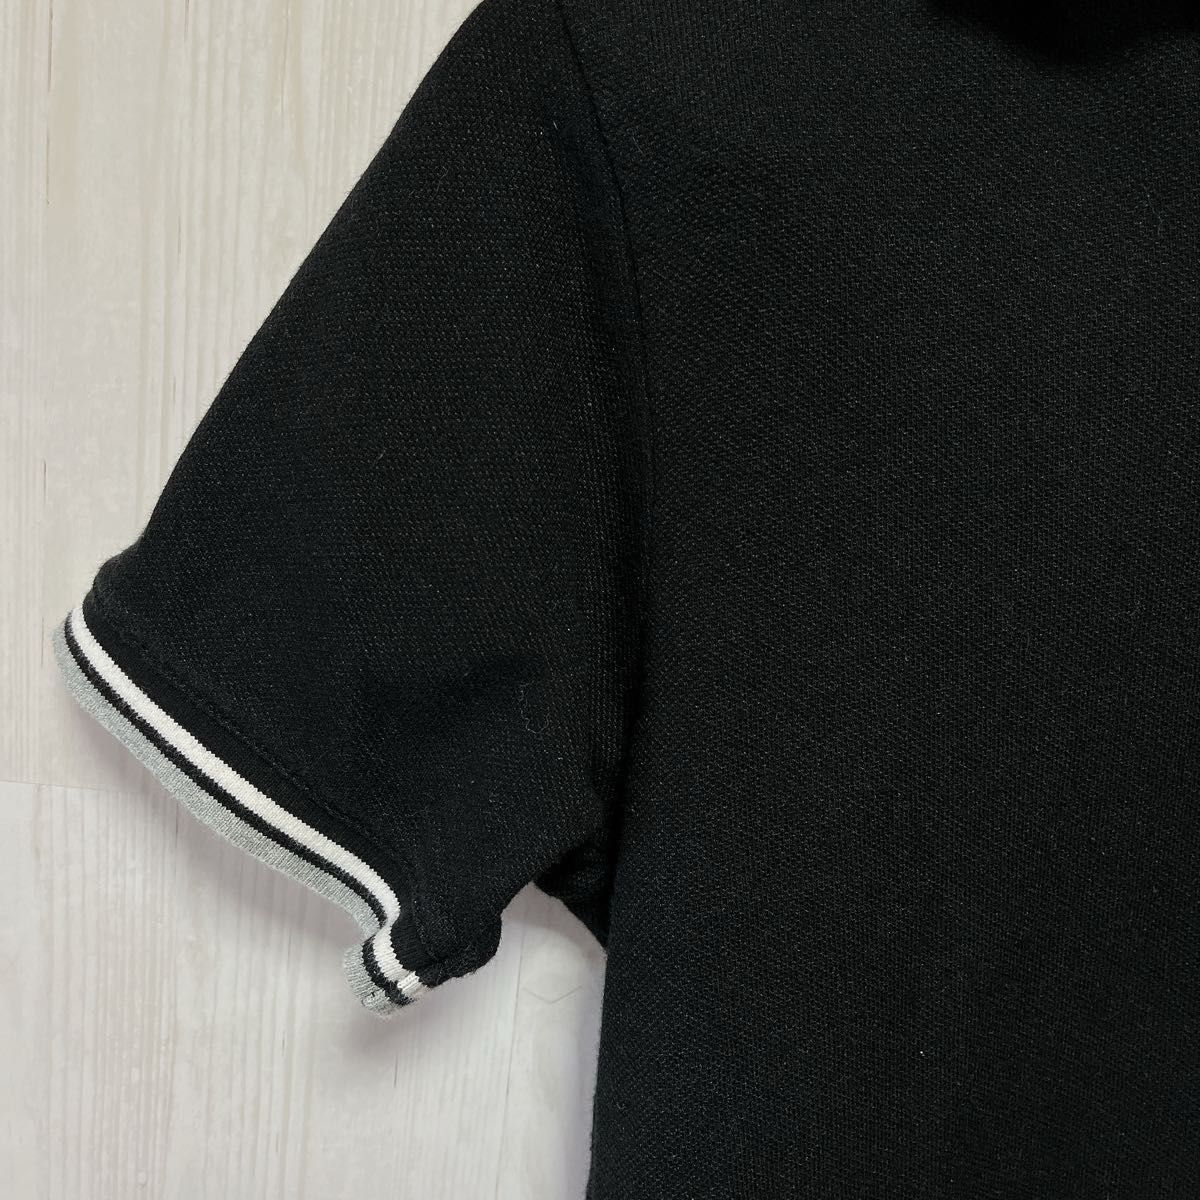 TK MIXPICE ティーケーミクスパイス 半袖ポロシャツ  黒 Lサイズ